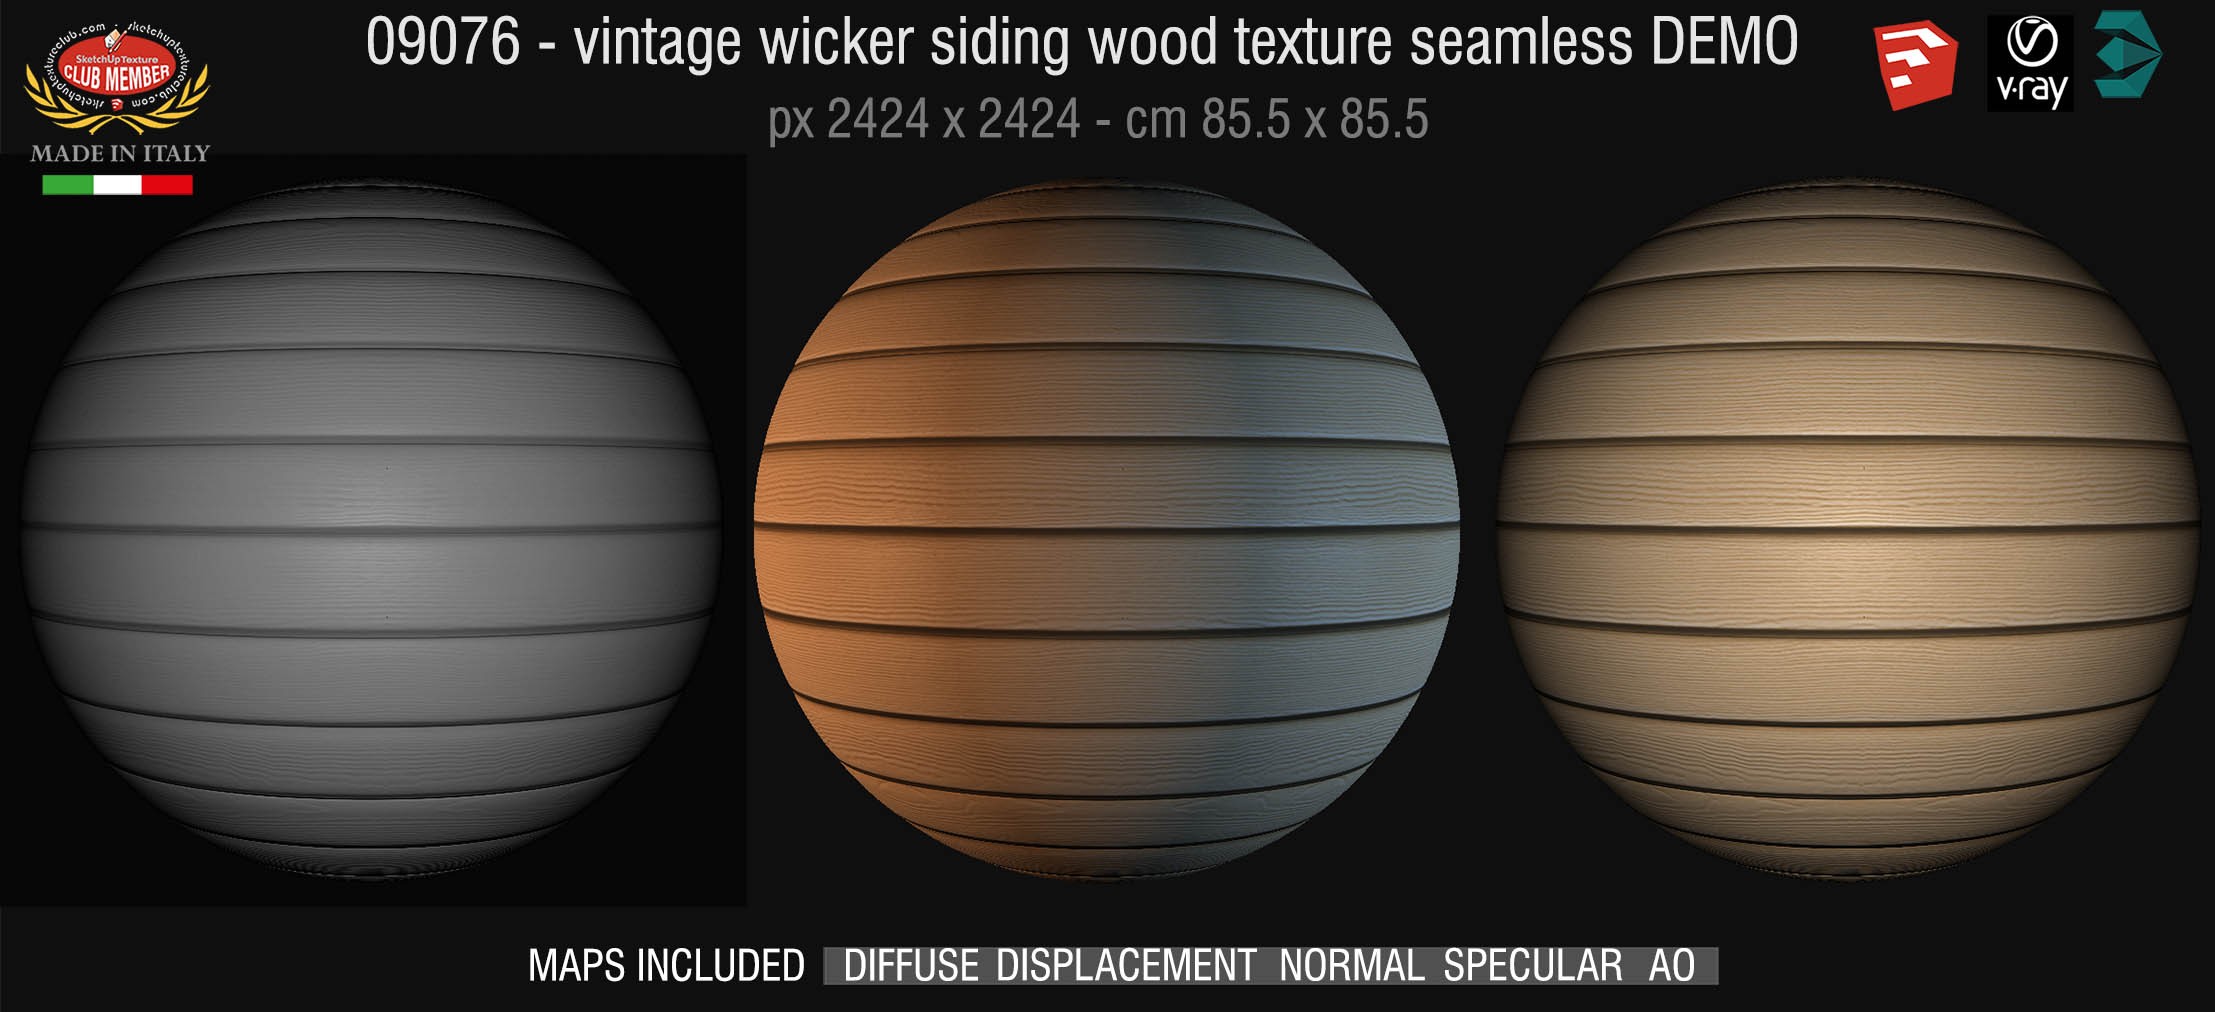 09076 HR Vintage wicker siding wood texture + maps DEMO